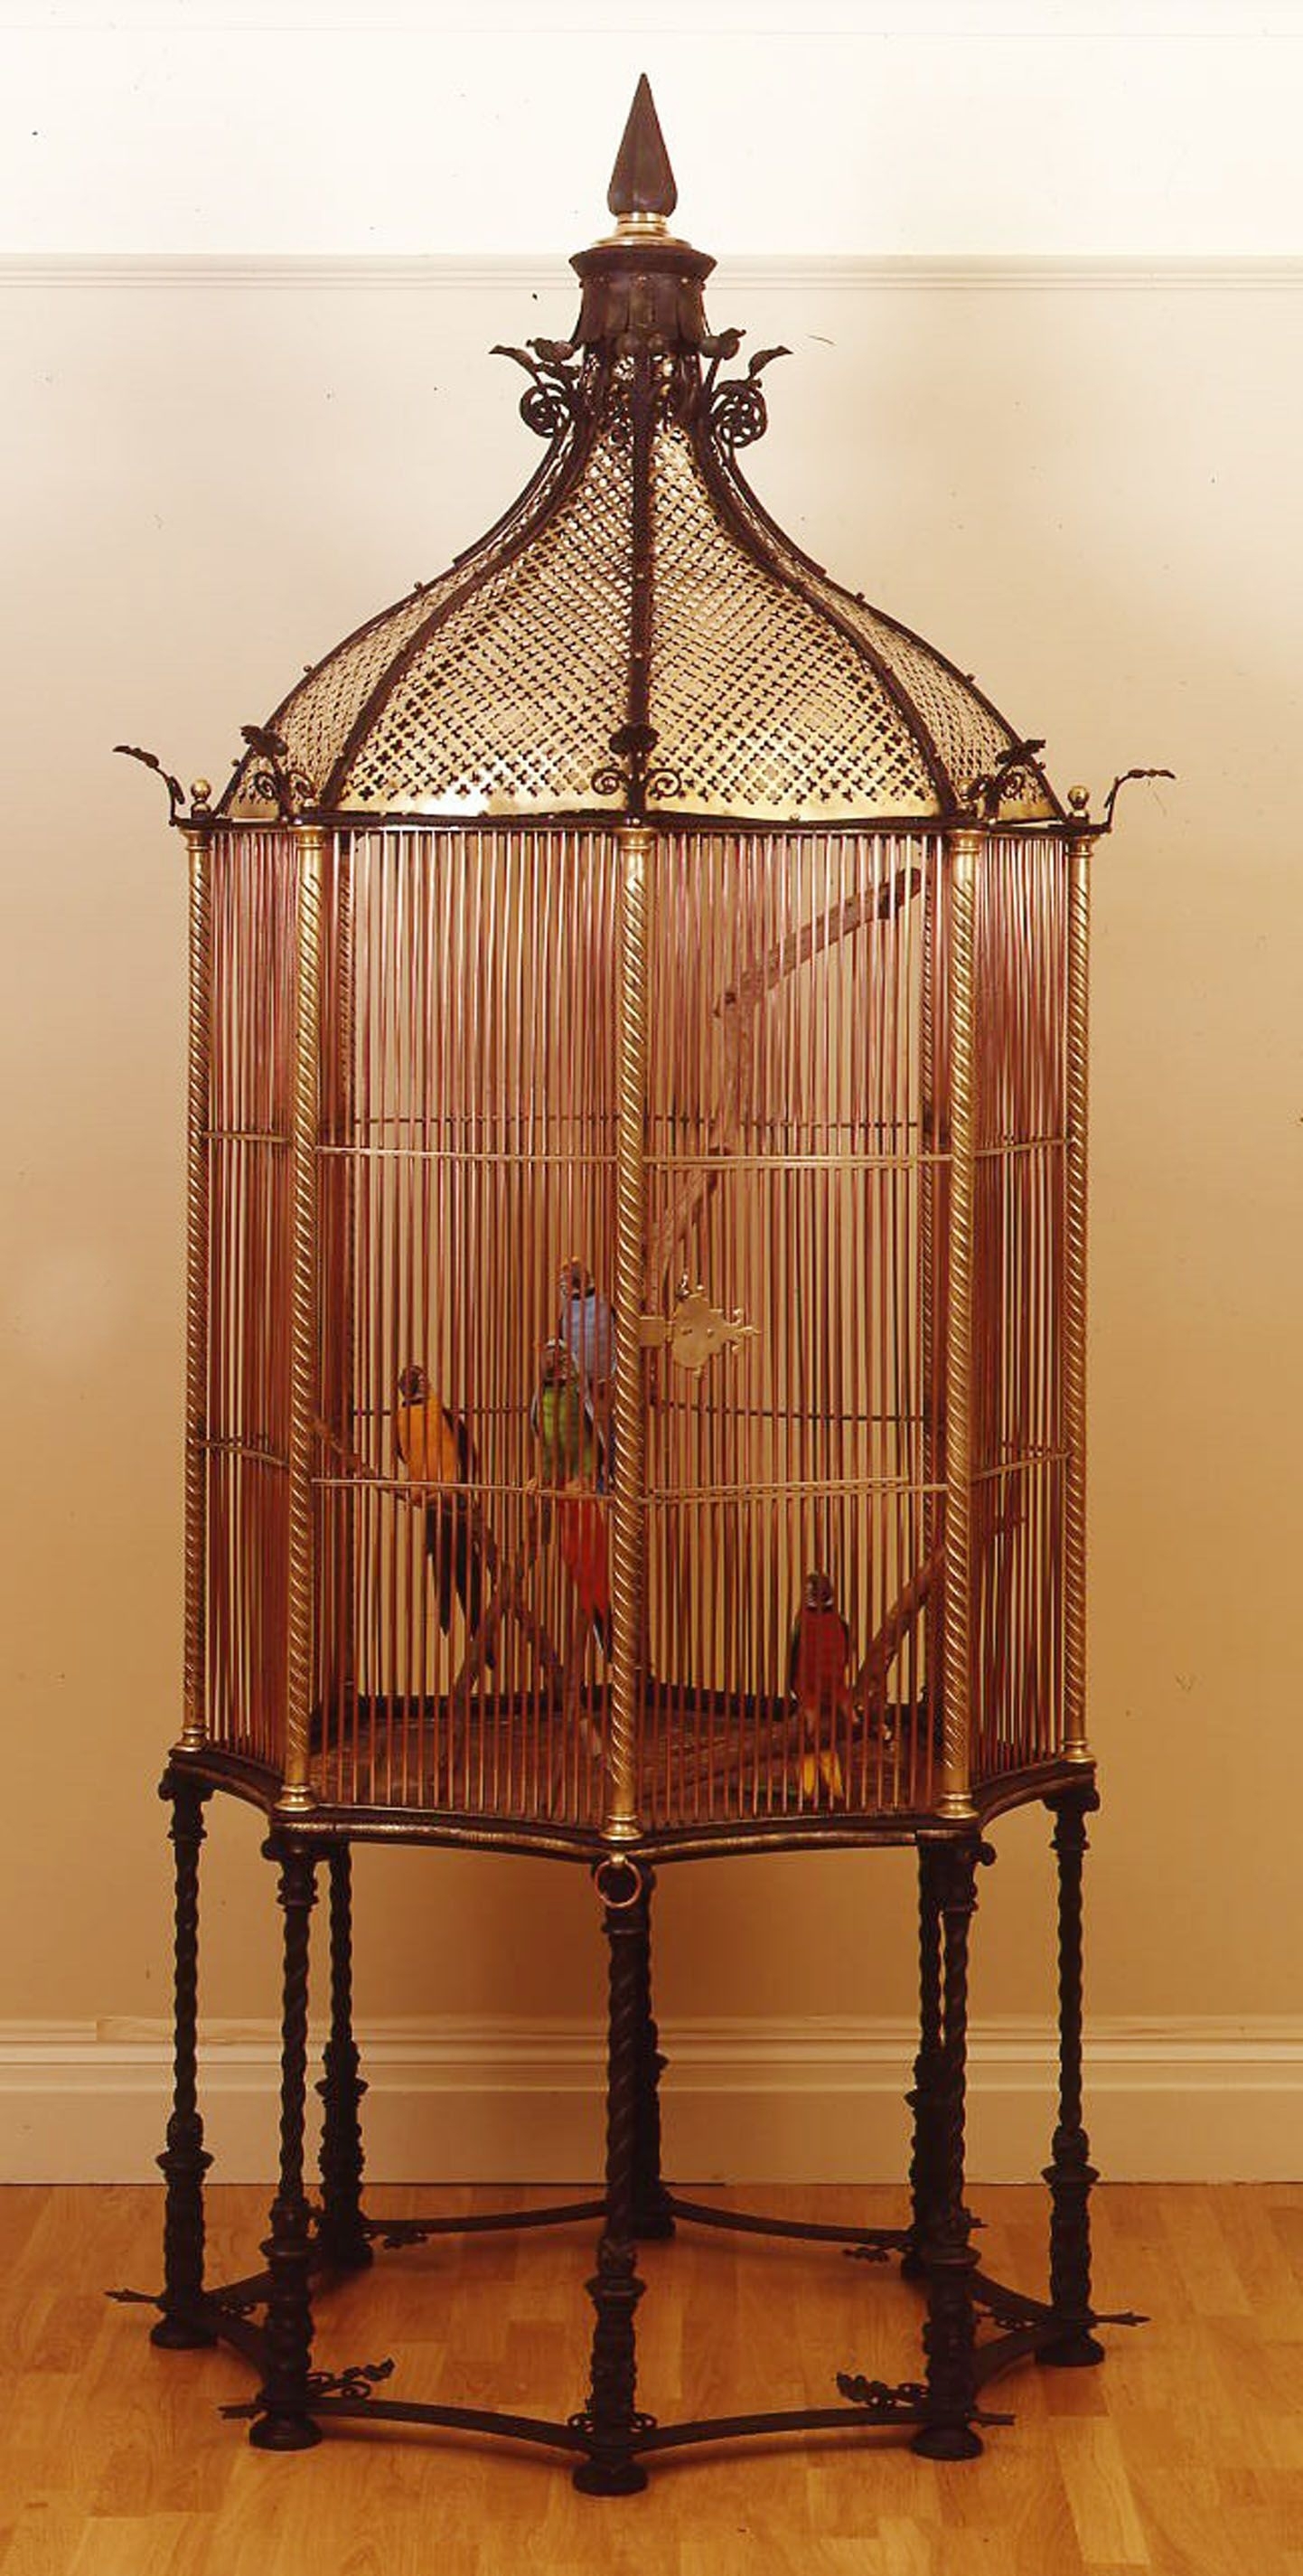 Iron Bird Cages (Antique / Vintage) - Foter